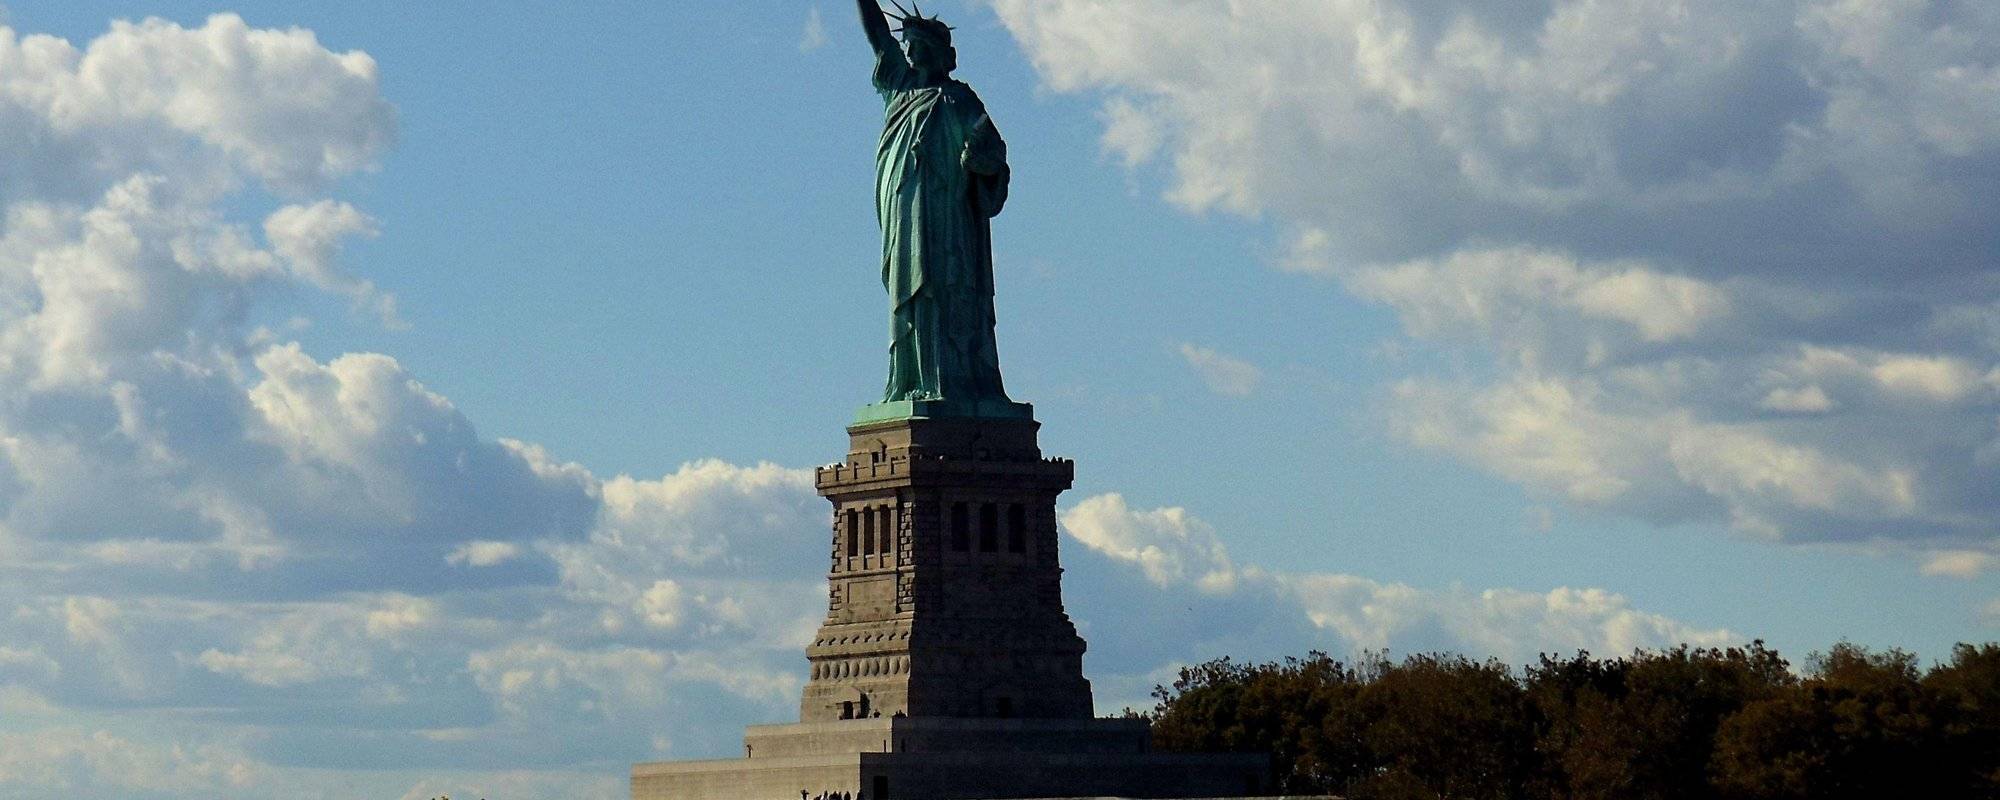 📷 USA trips ▶ set # 2 ▶ Statue of Liberty